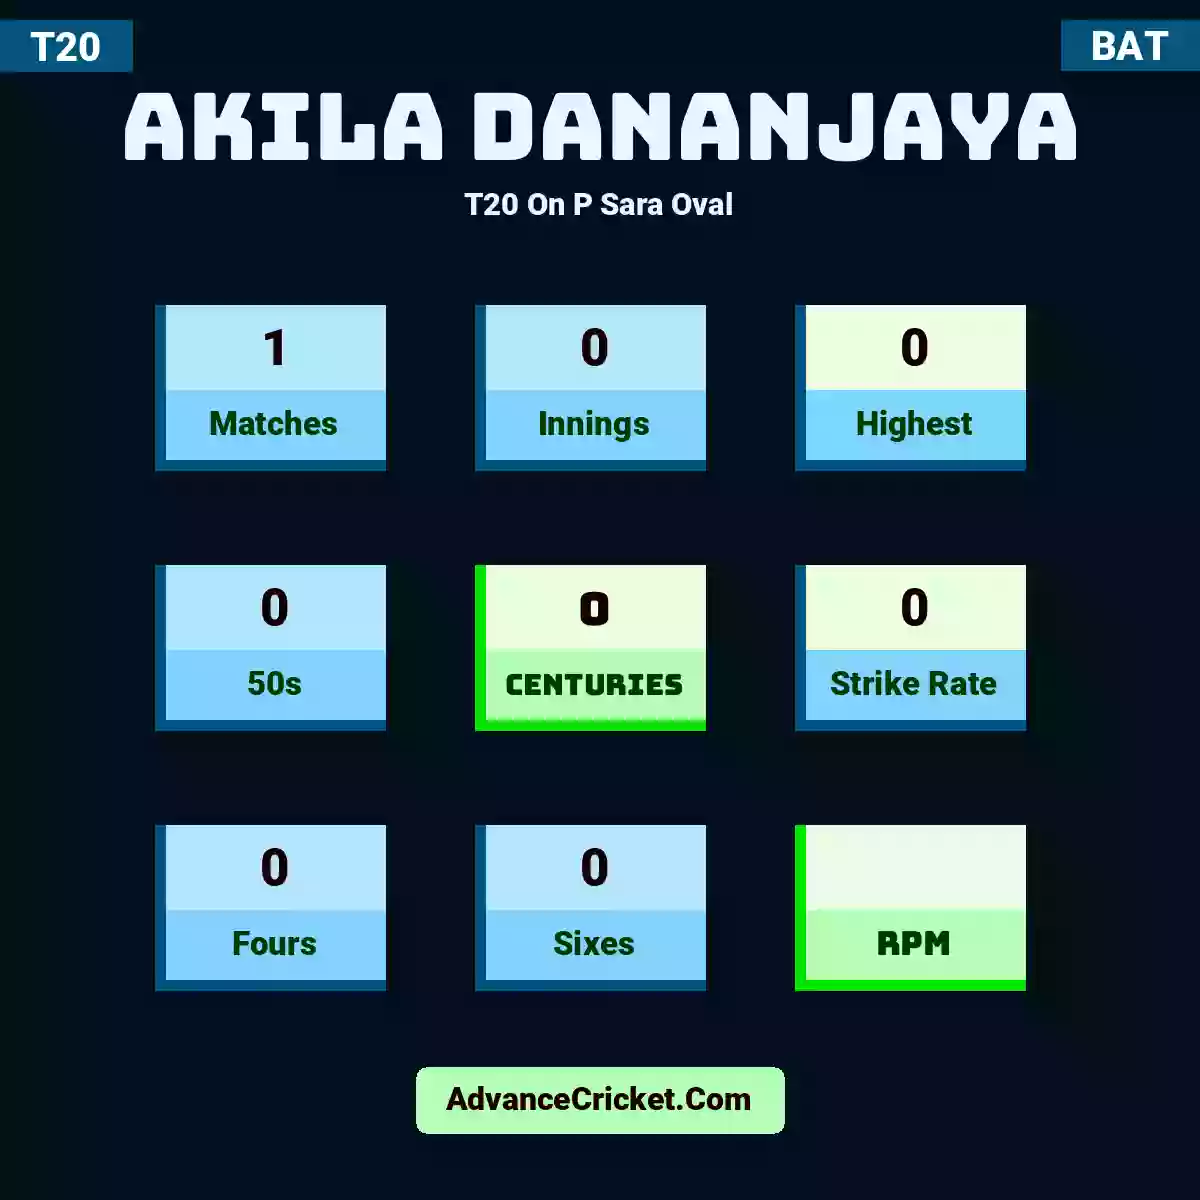 Akila Dananjaya T20  On P Sara Oval, Akila Dananjaya played 1 matches, scored 0 runs as highest, 0 half-centuries, and 0 centuries, with a strike rate of 0. A.Dananjaya hit 0 fours and 0 sixes.